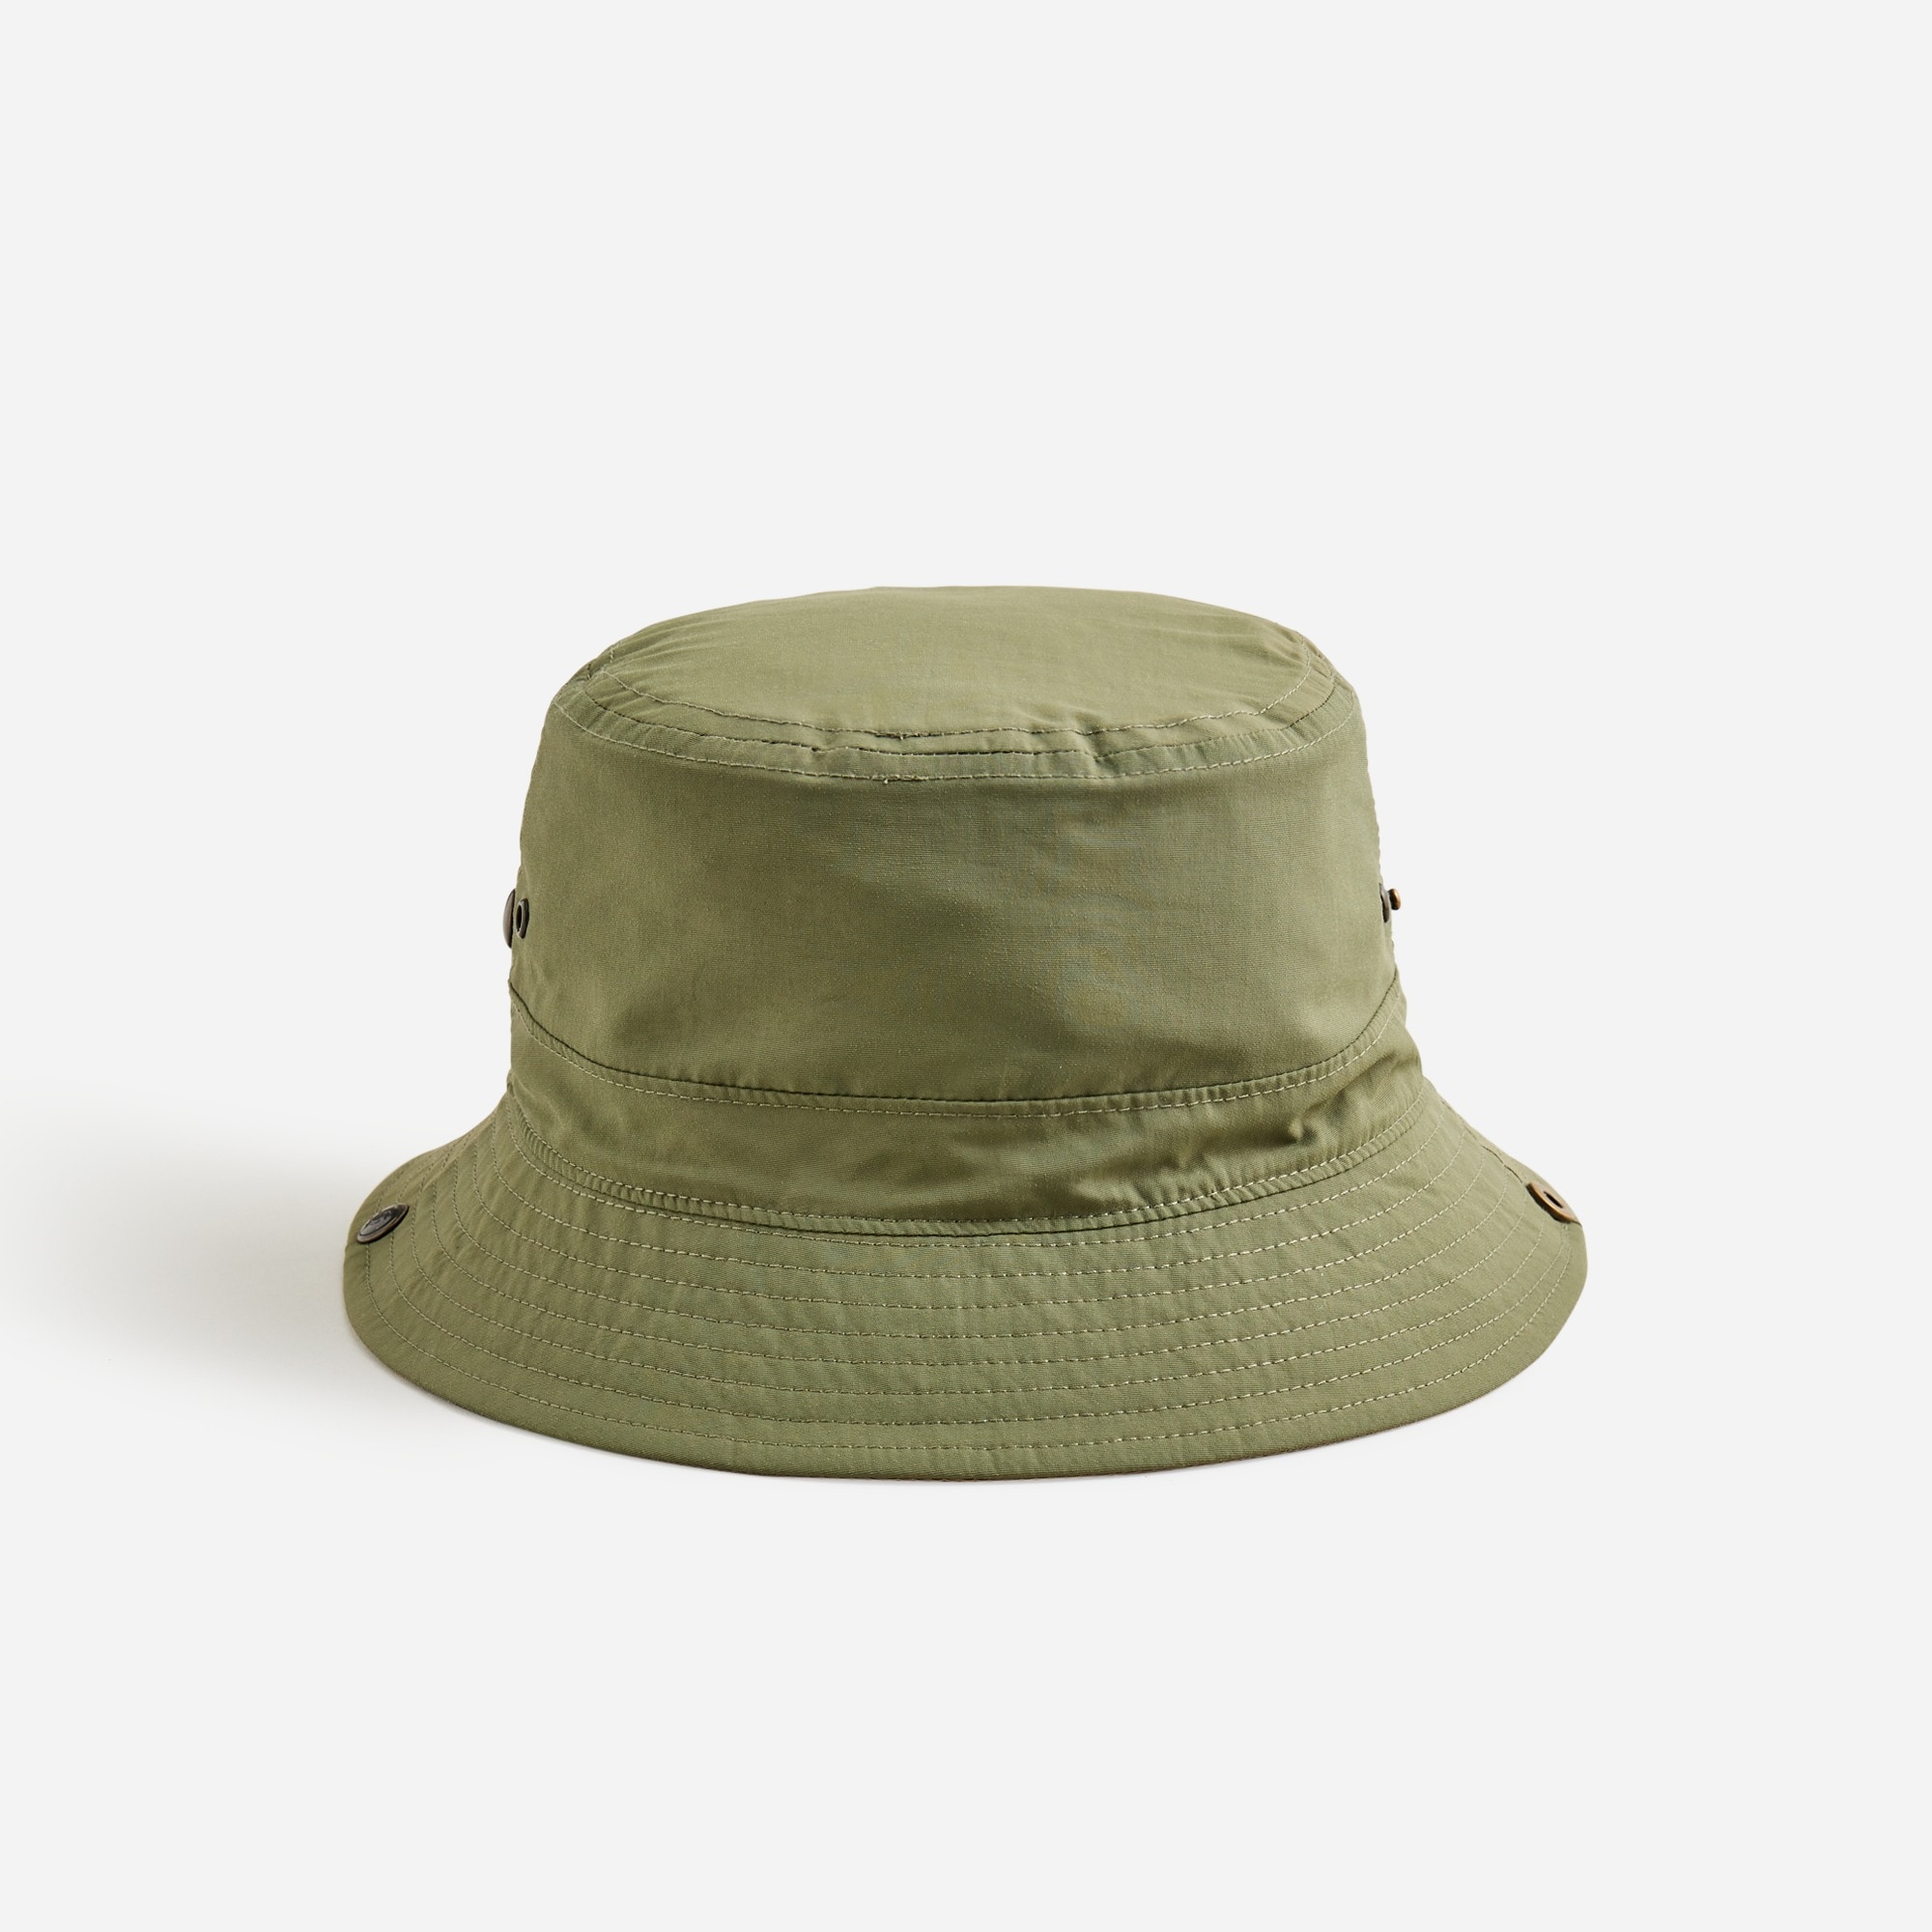 mens Reversible bucket hat in taslan nylon